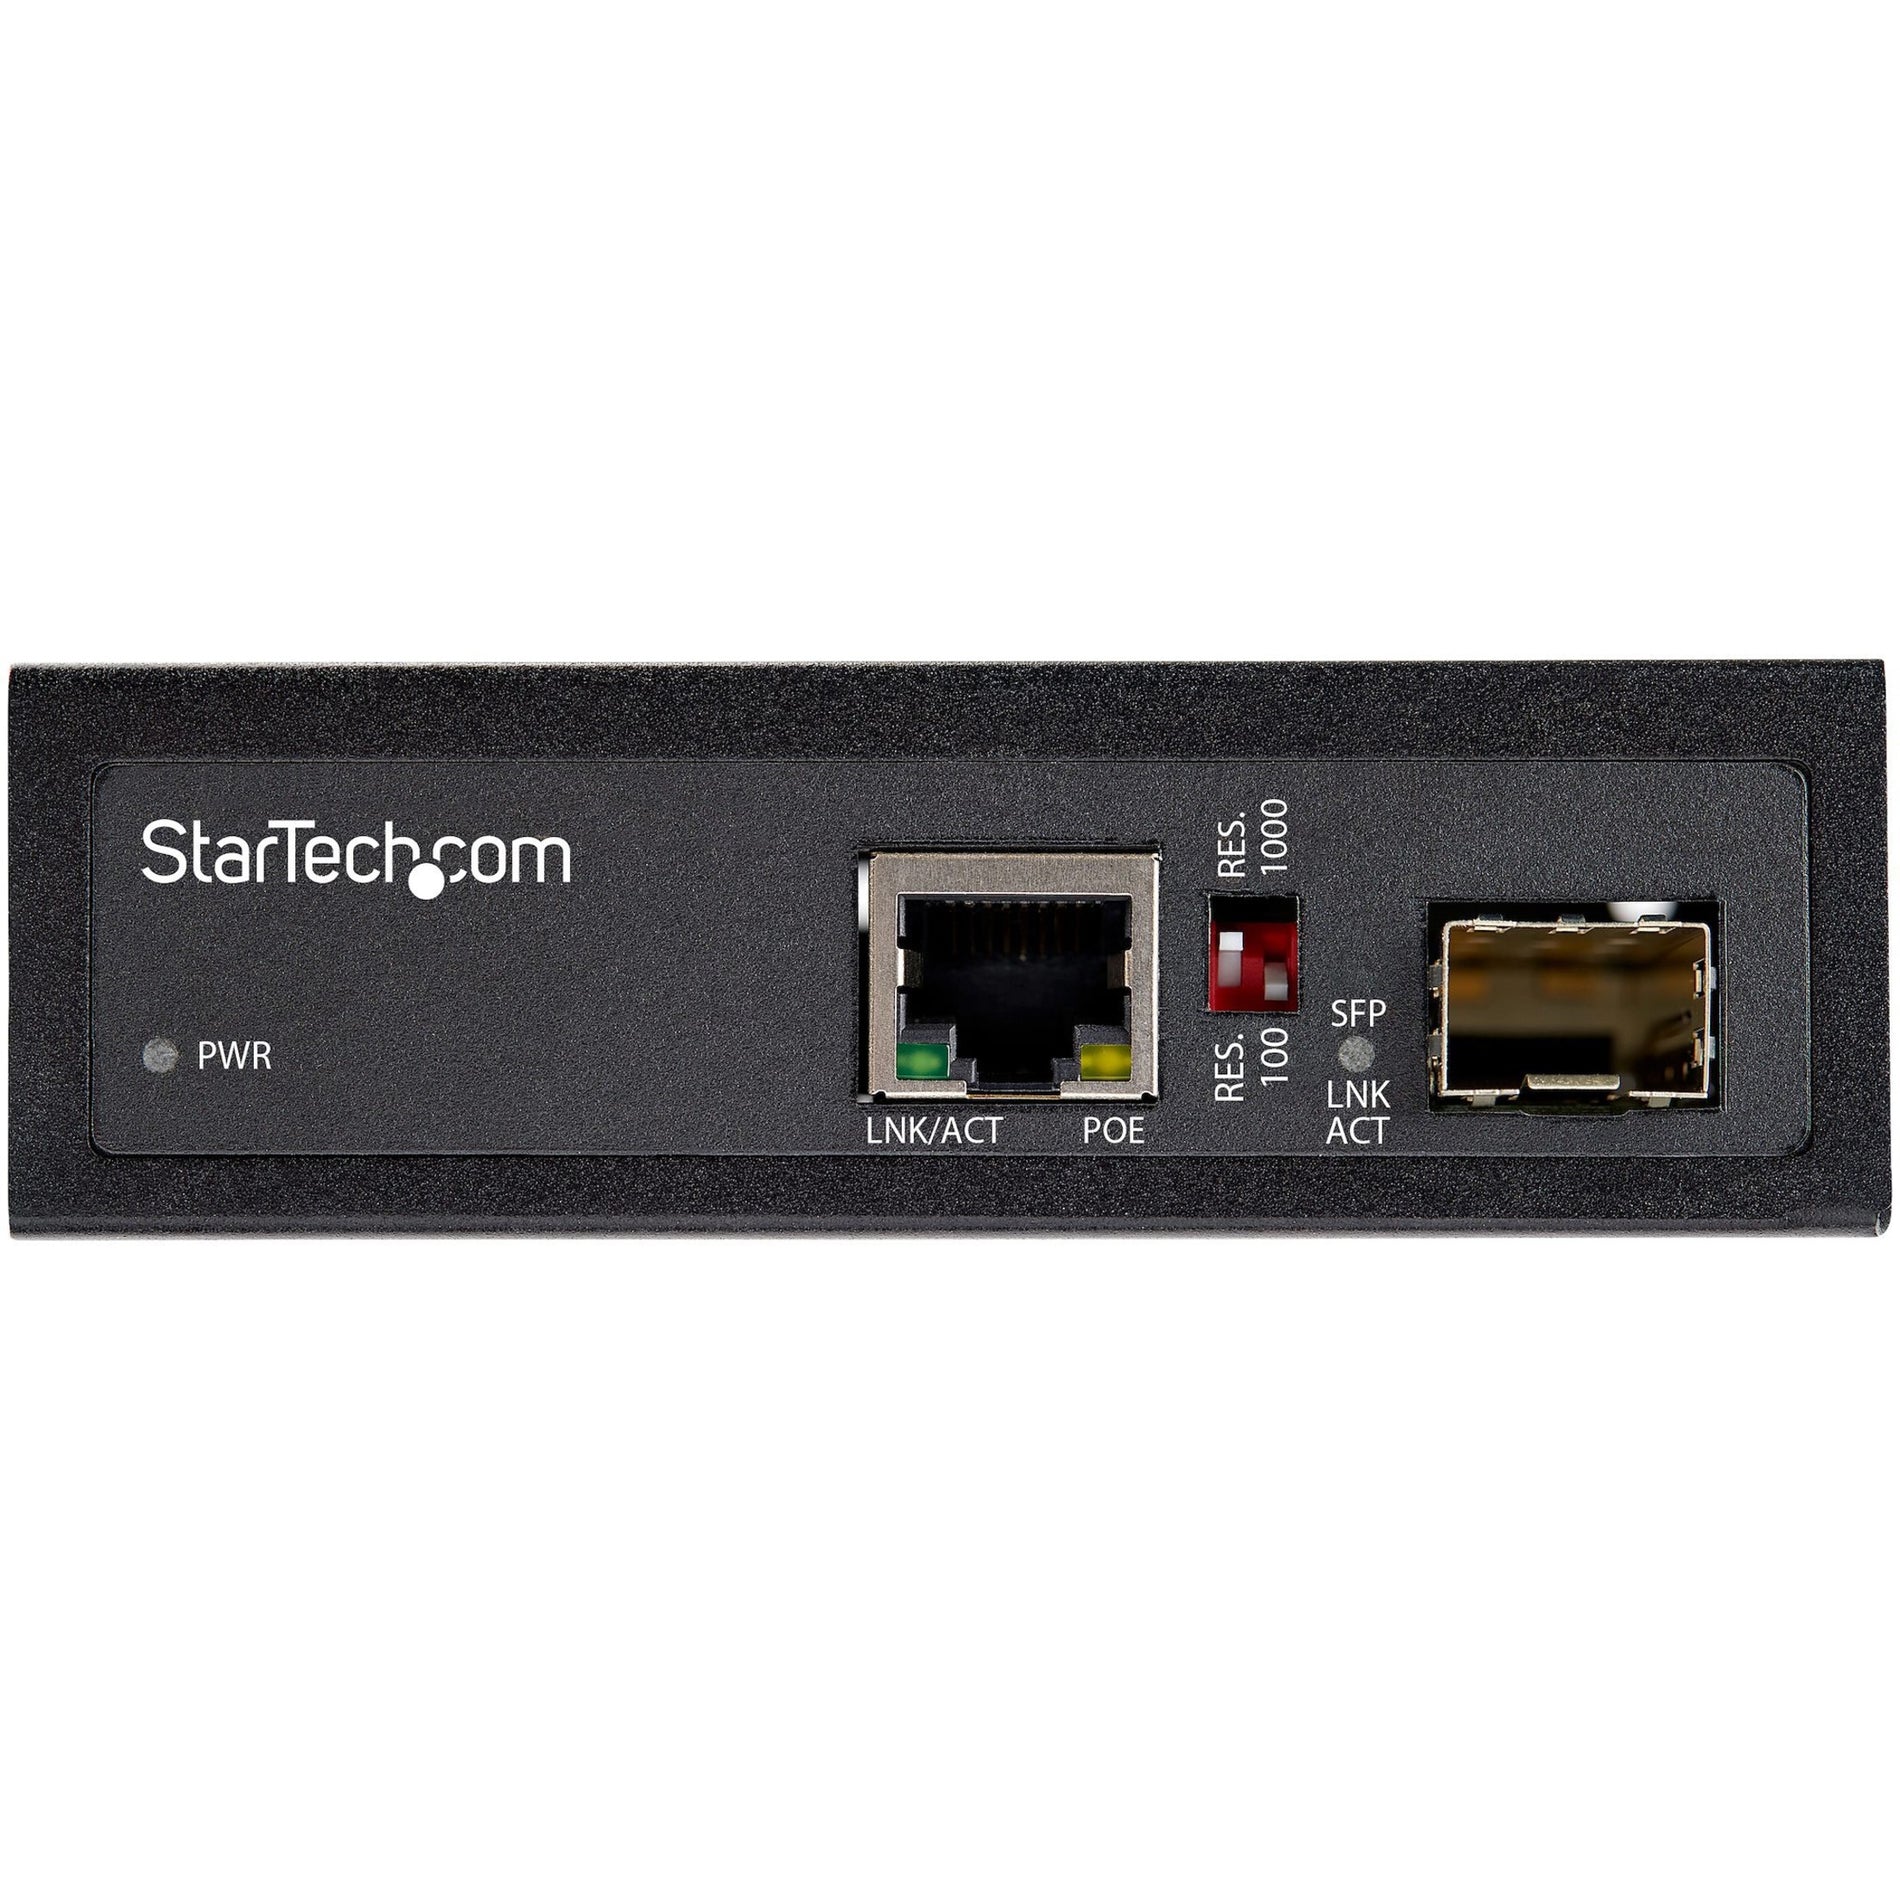 StarTech.com IMC1GSFP60W Transceiver/Media Converter, Gigabit Ethernet, 1000Base-T, 100Base-T, 100Base-TX, 1000Base-TX, Single-mode/Multi-mode, Twisted Pair/Optical Fiber